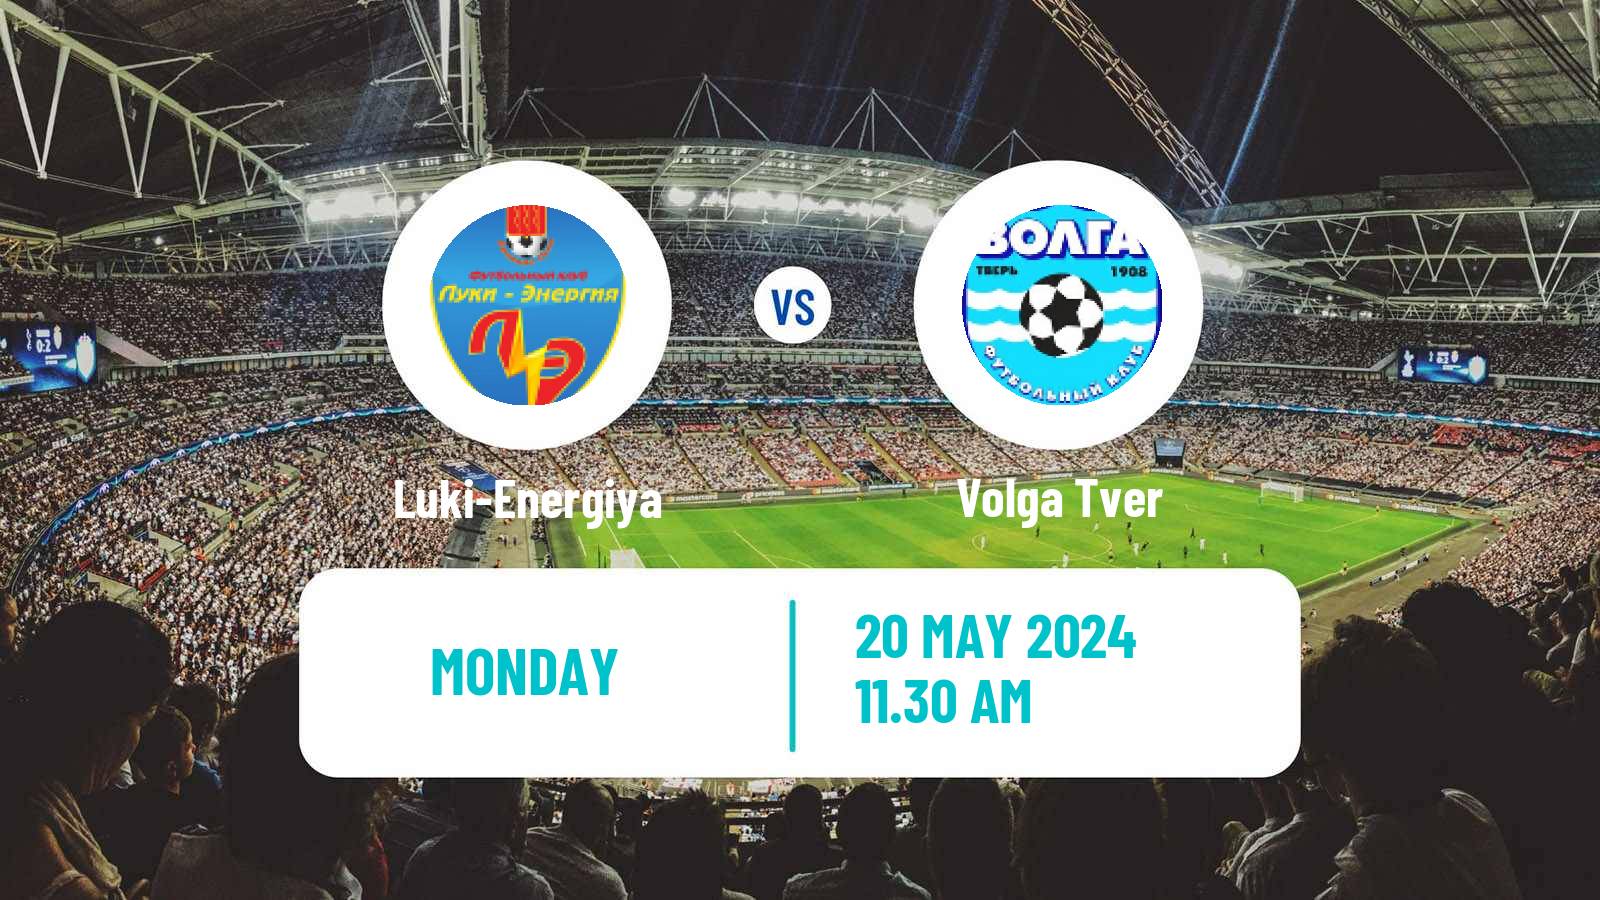 Soccer FNL 2 Division B Group 2 Luki-Energiya - Volga Tver